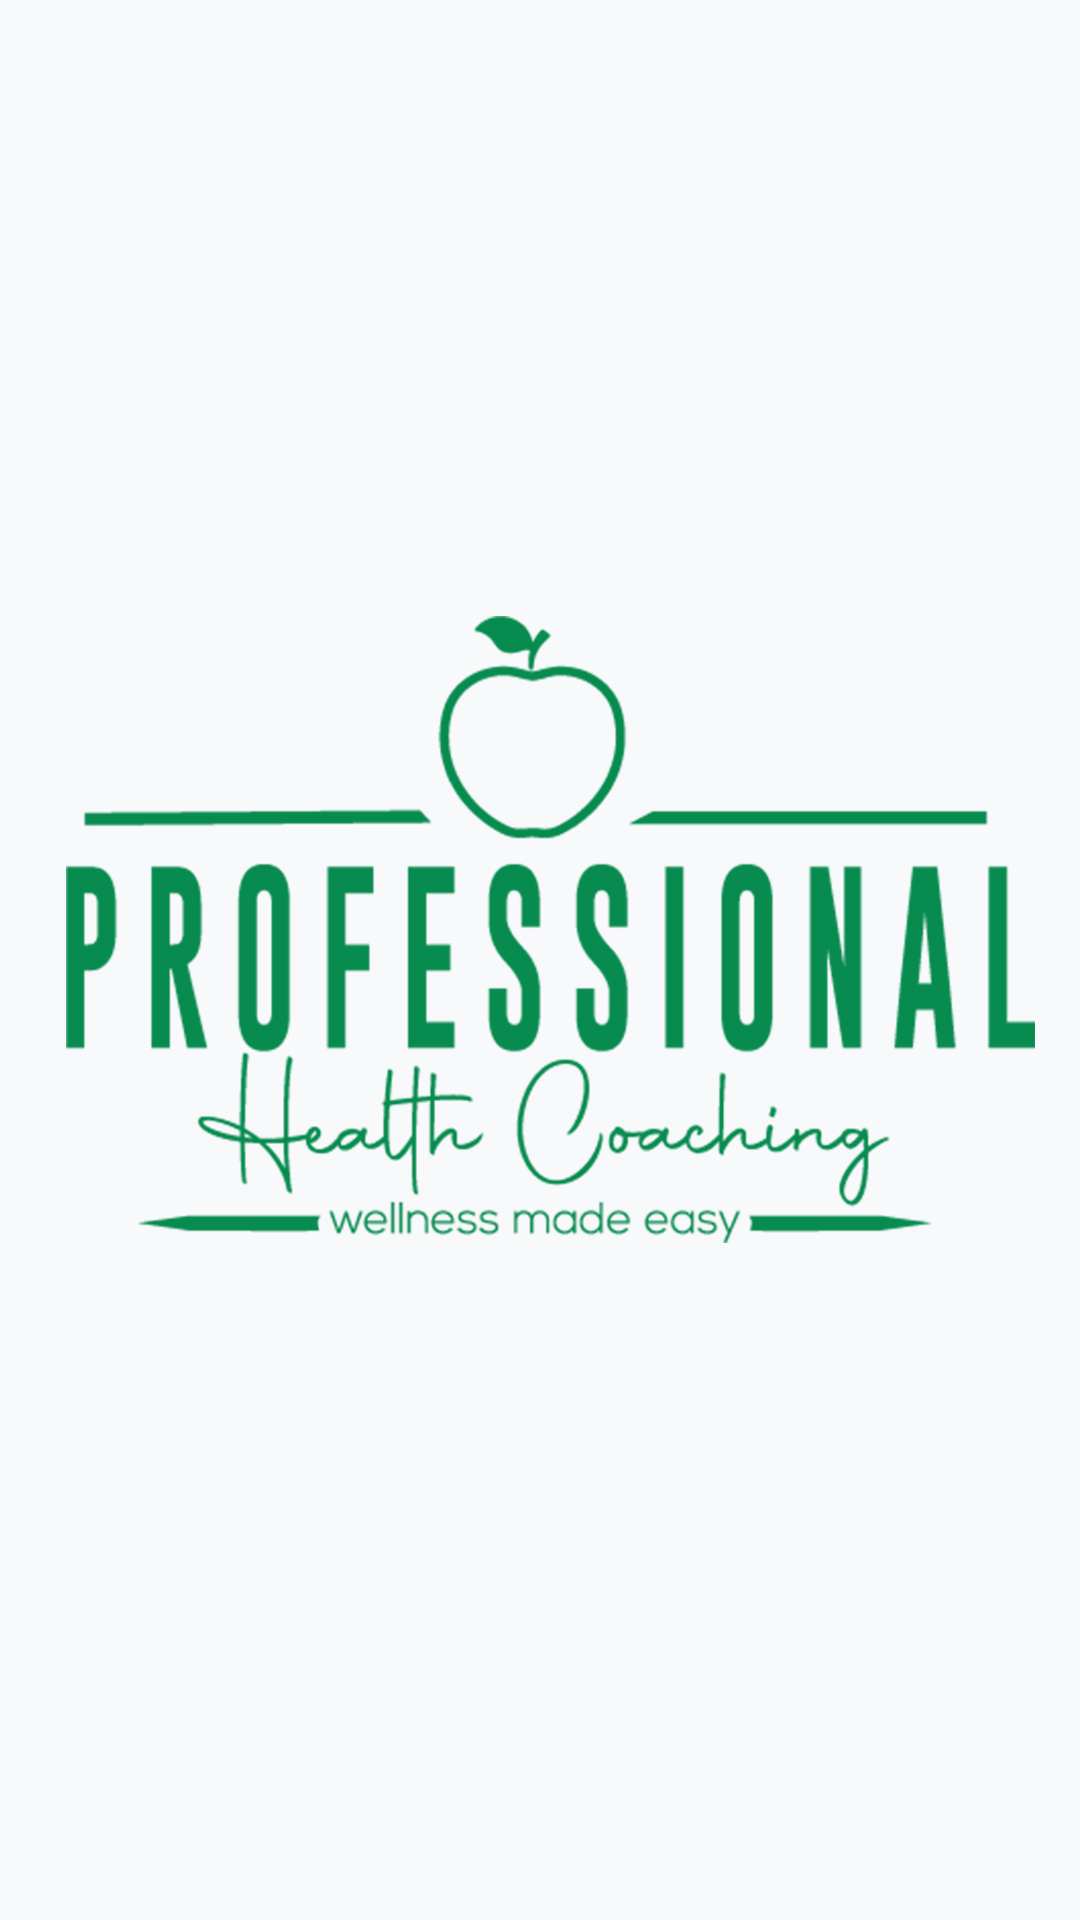 Professional Health Coaching